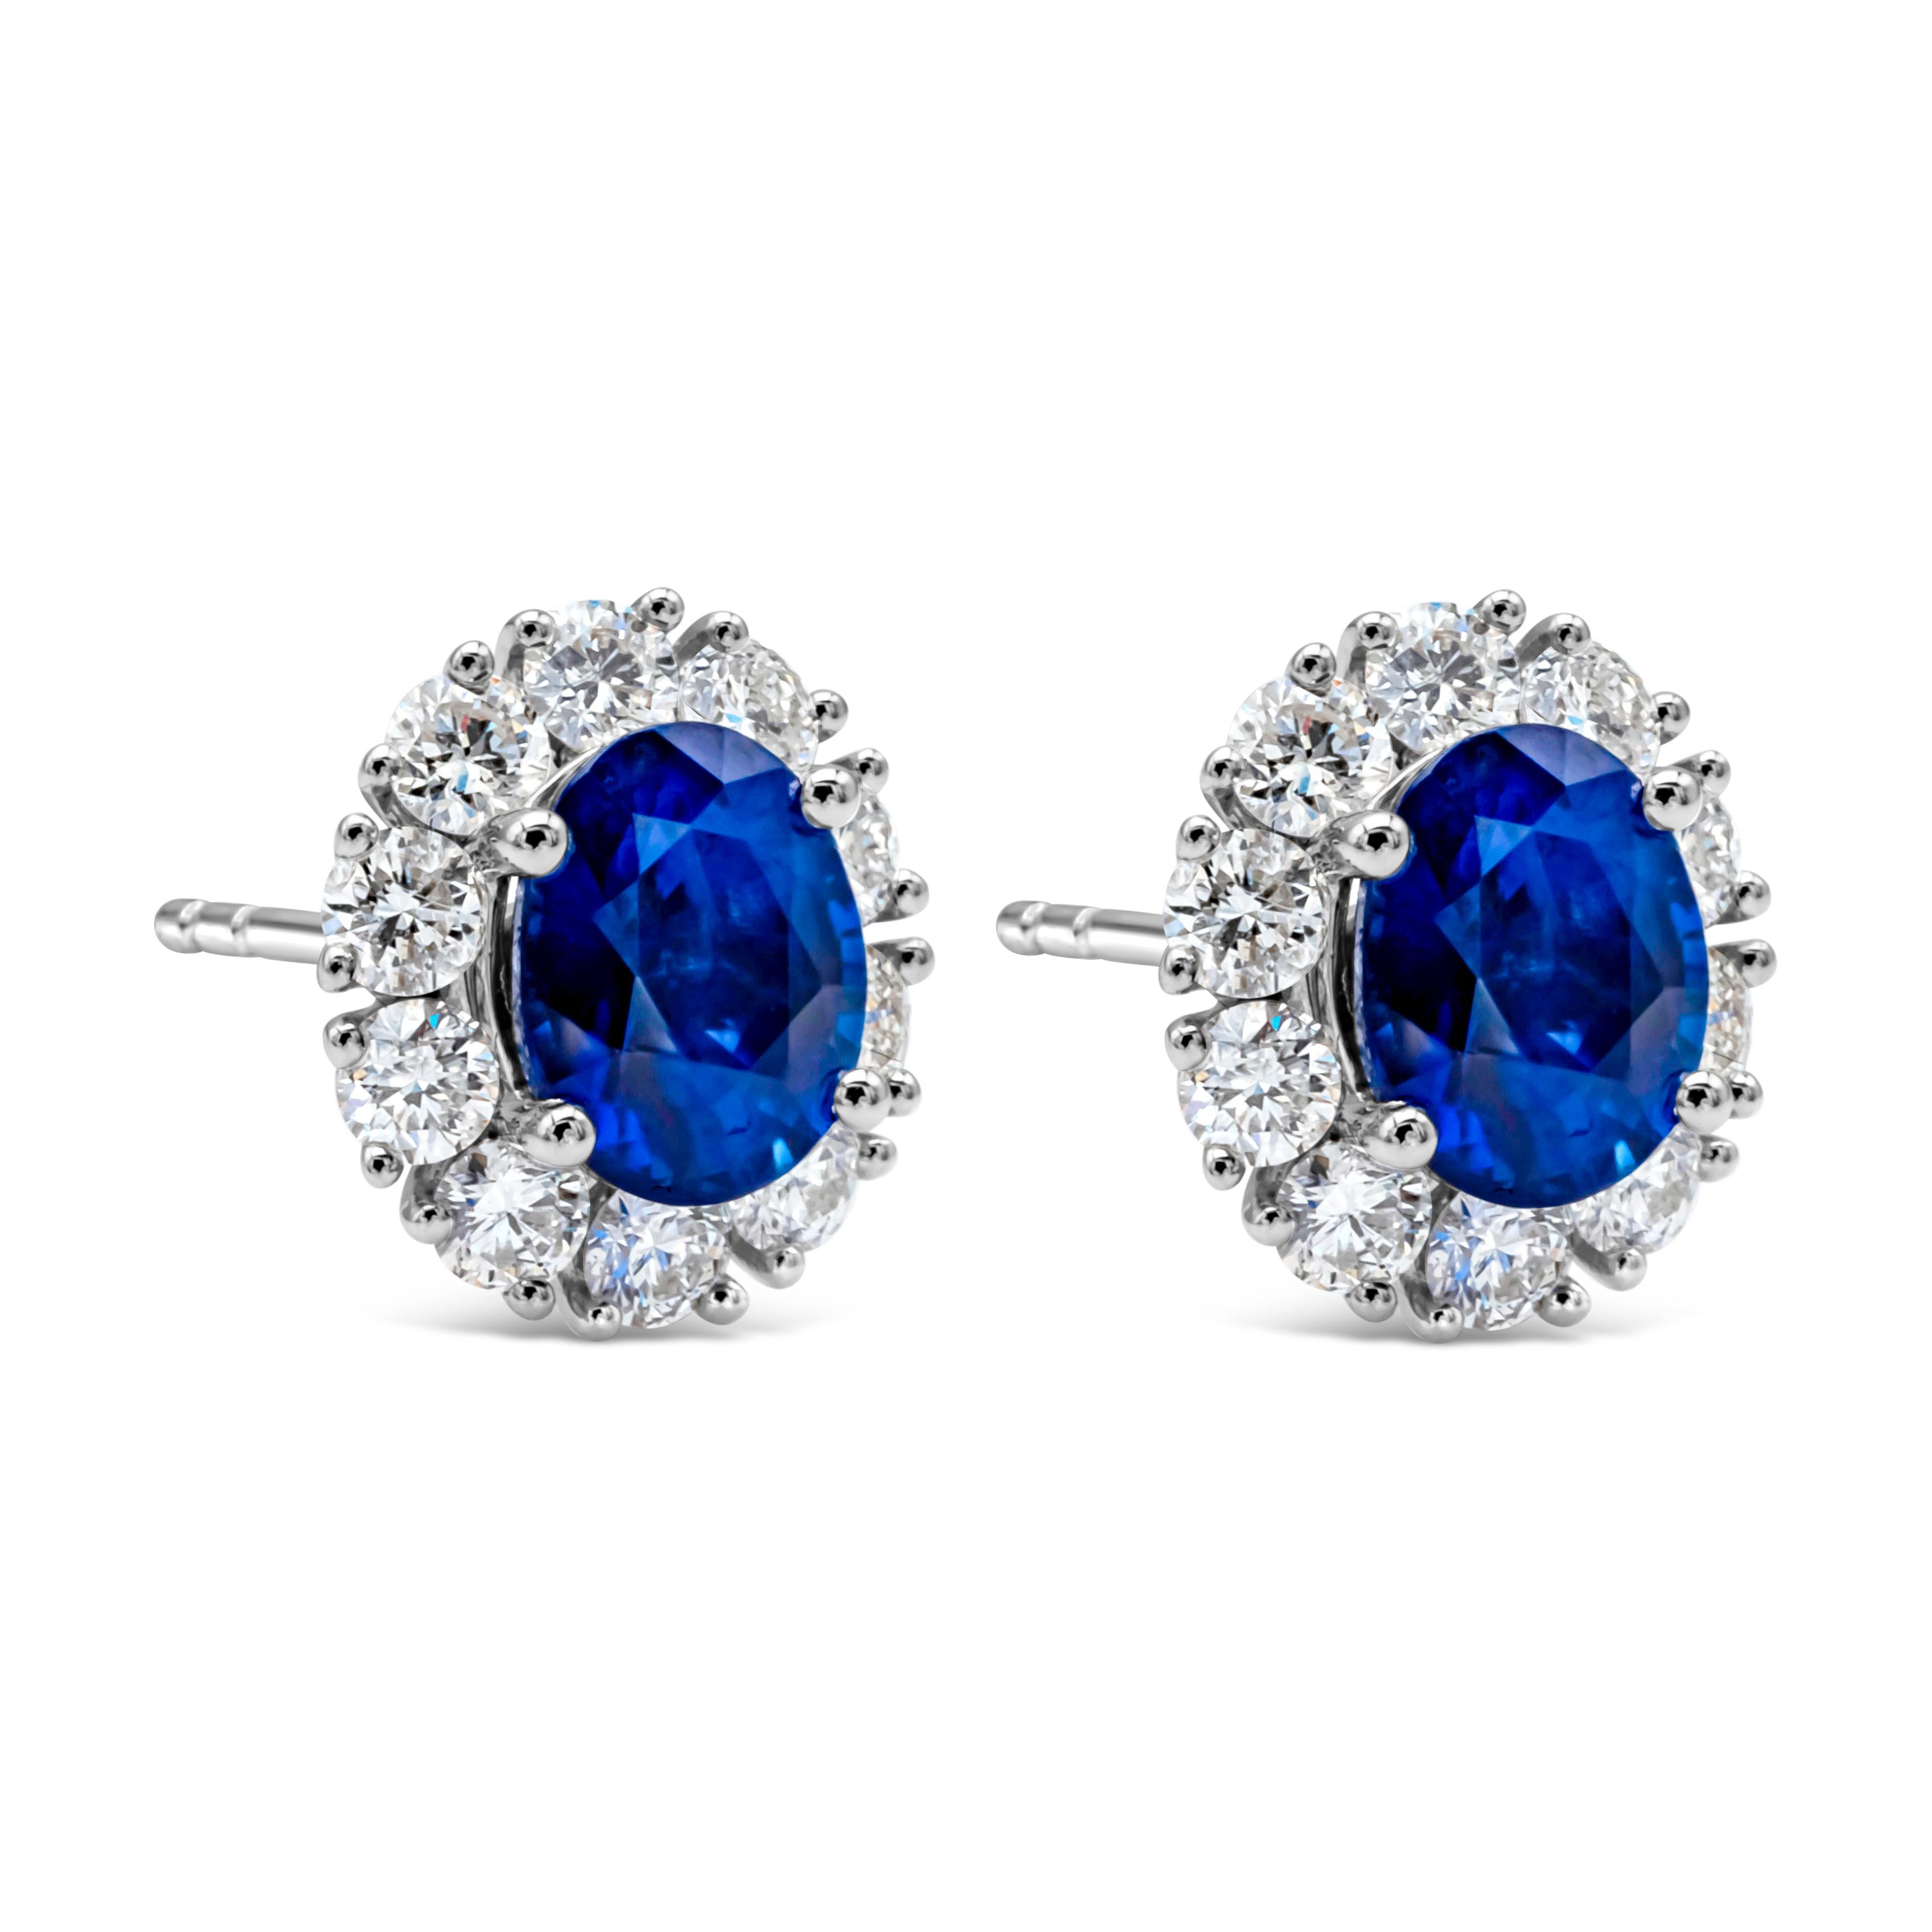 Contemporary Roman Malakov 2.29 Carats Total Oval Cut Blue Sapphire & Diamond Stud Earrings For Sale